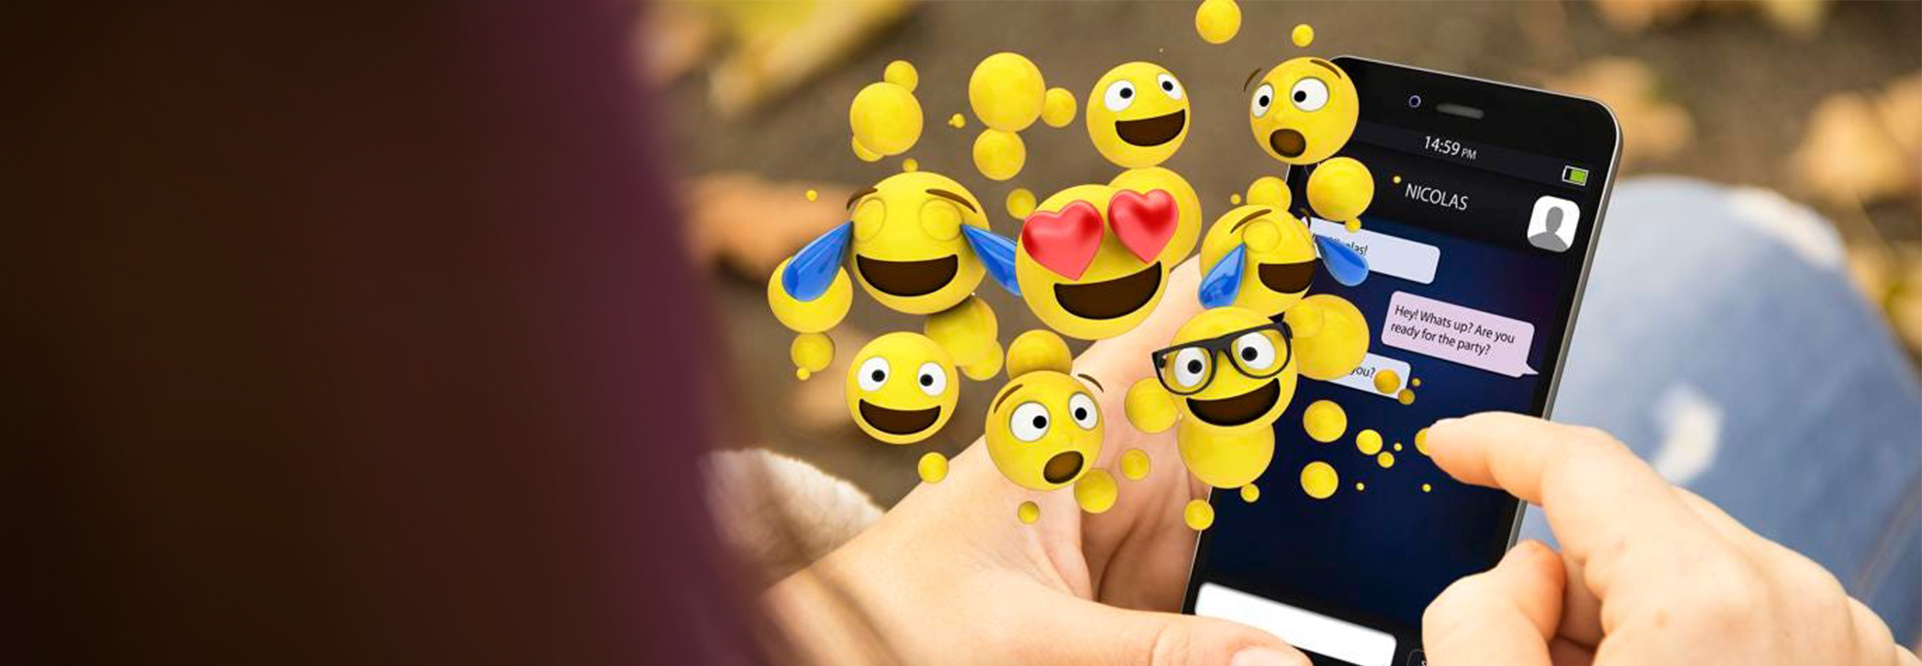 Get These Awesome Emoji Packs to Celebrate World Emoji Day